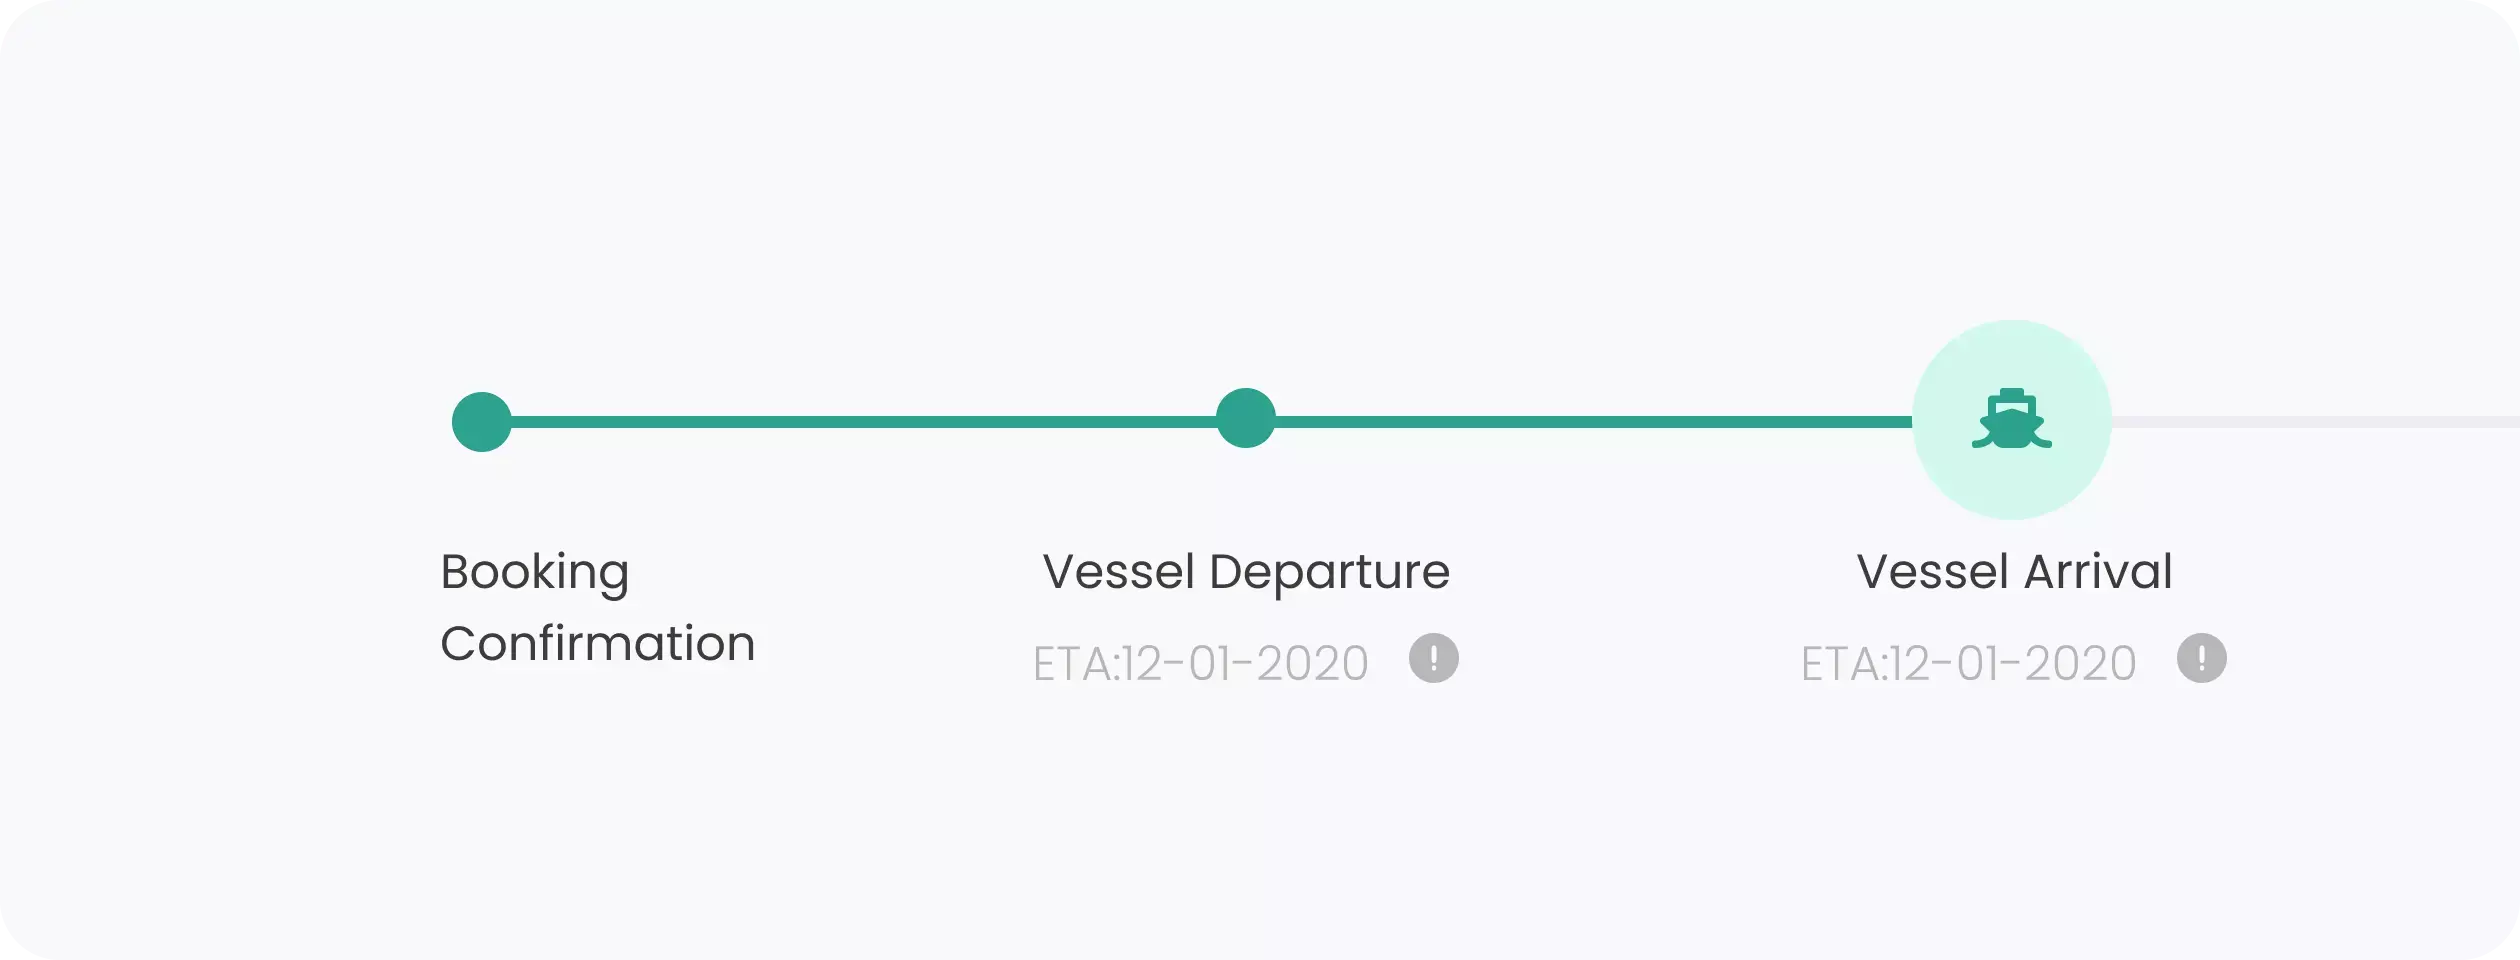 Timeline of booking confirmation, vessel departure, and vessel arrival.